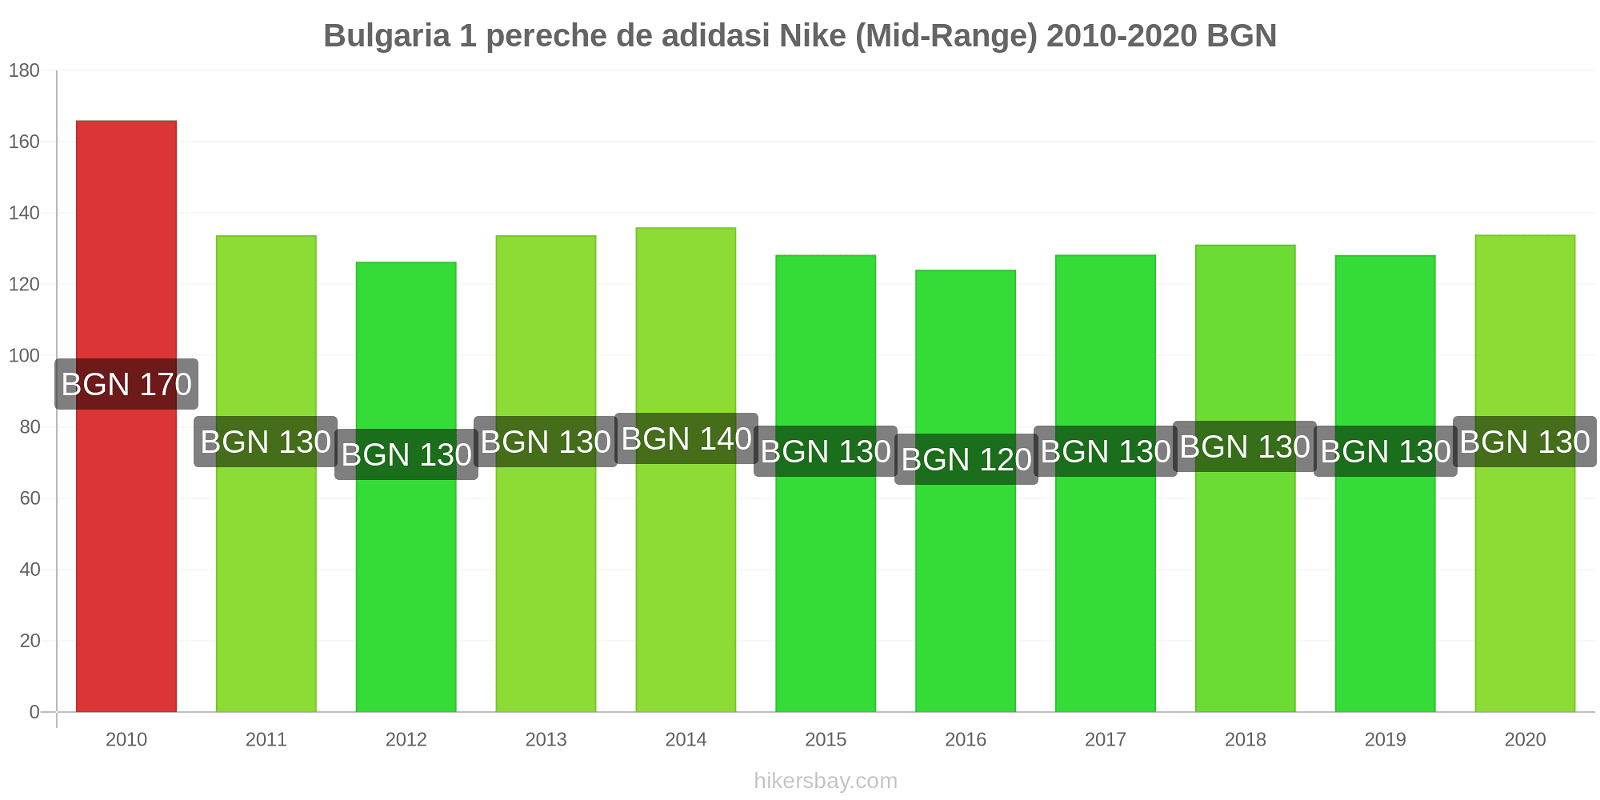 Bulgaria modificări de preț 1 pereche de adidasi Nike (Mid-Range) hikersbay.com